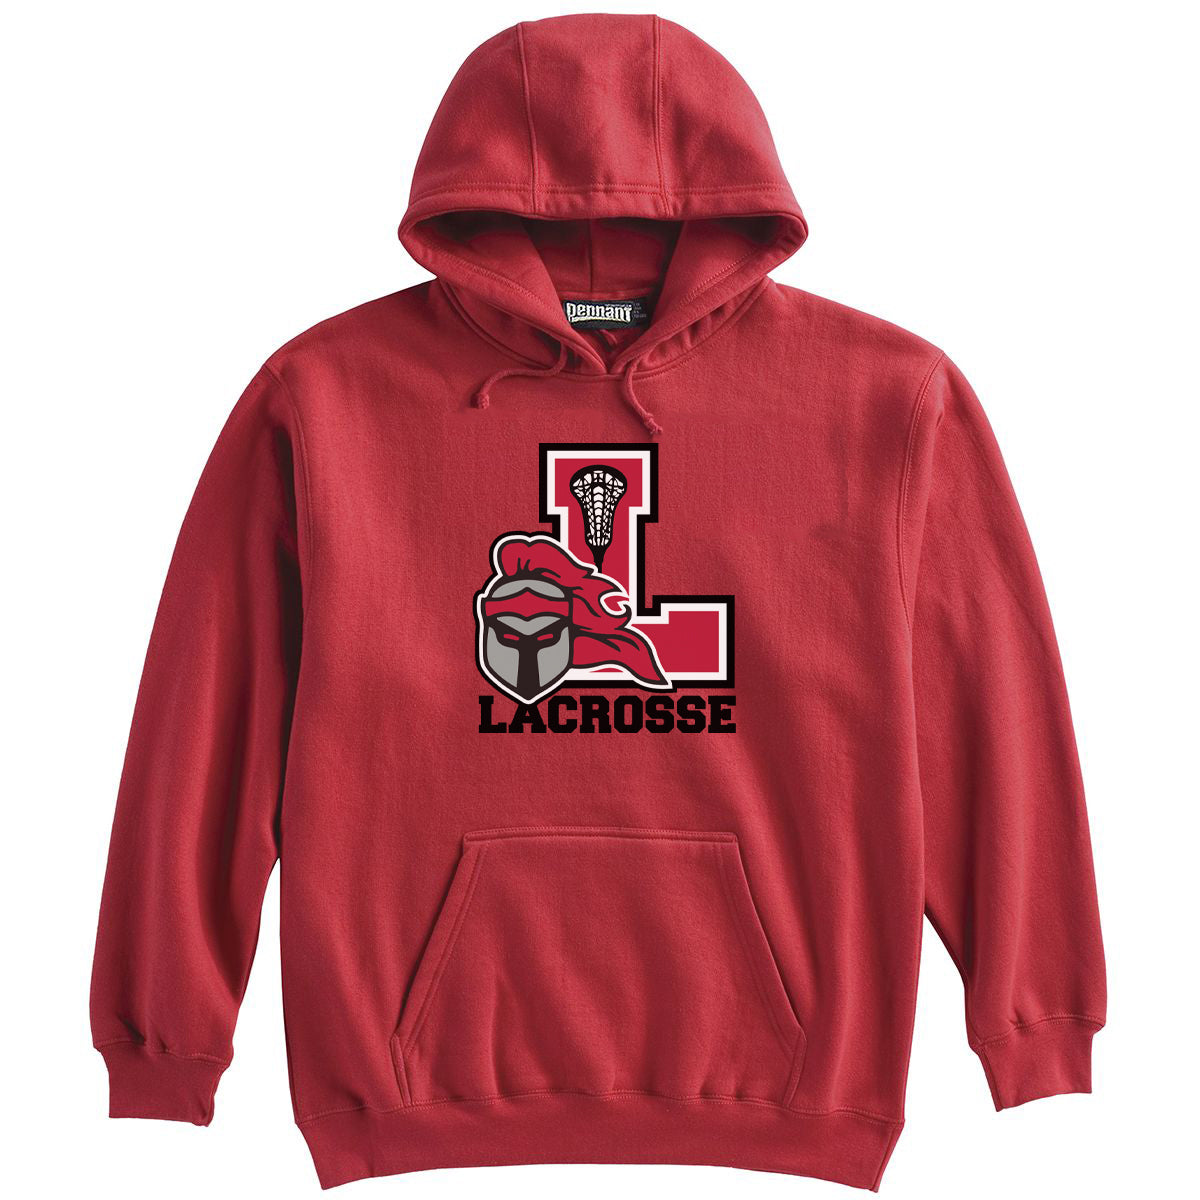 Lancaster Legends Lacrosse Red Sweatshirt